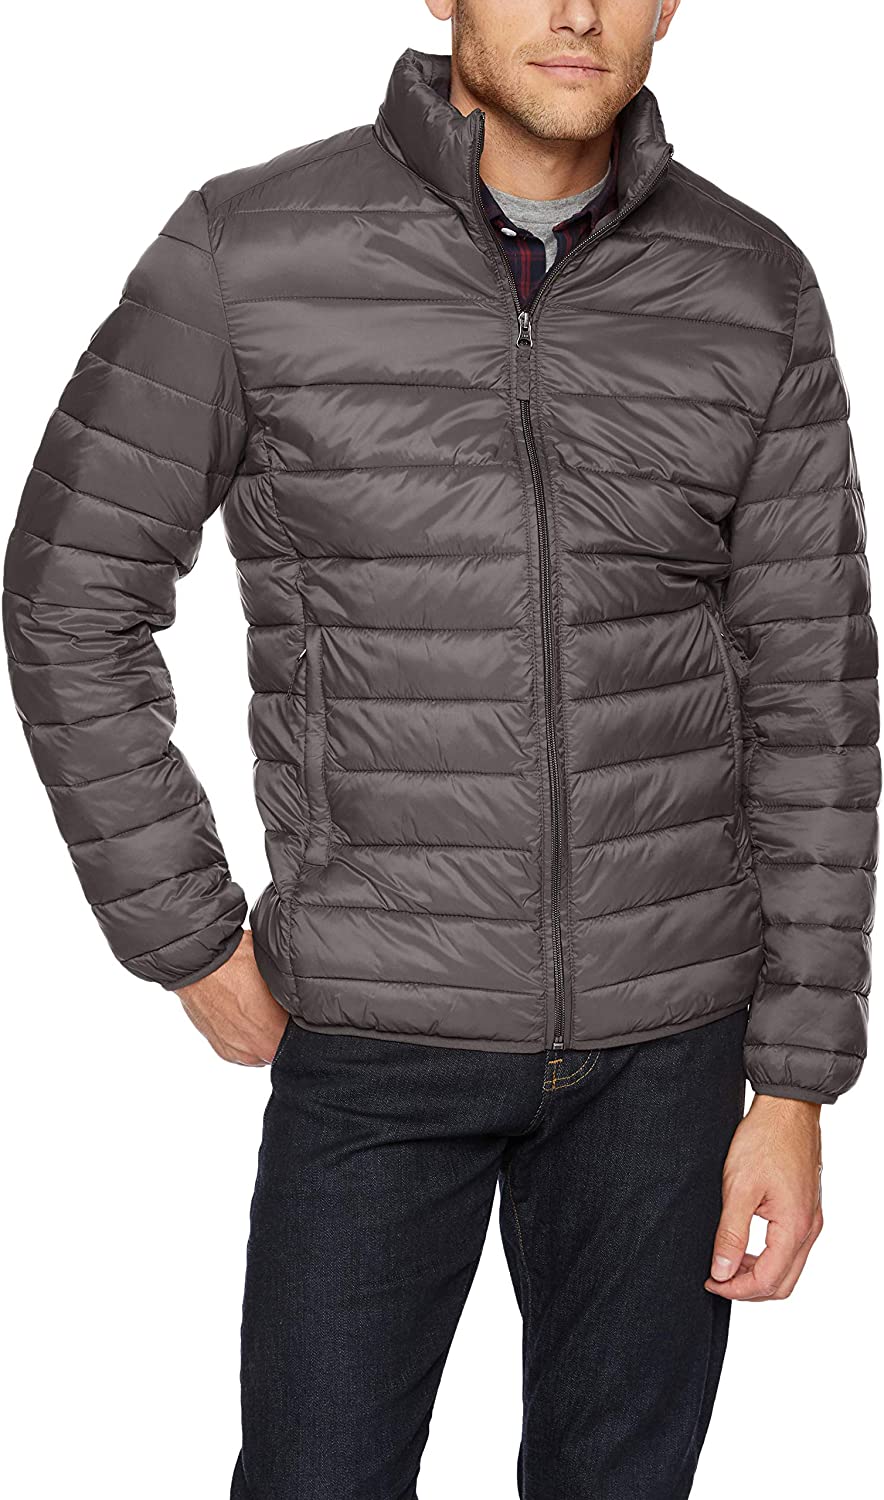 xiaohuoban Mens Packable Down Jacket Winter Insulated Hooded Puffer Lightweight Coat 